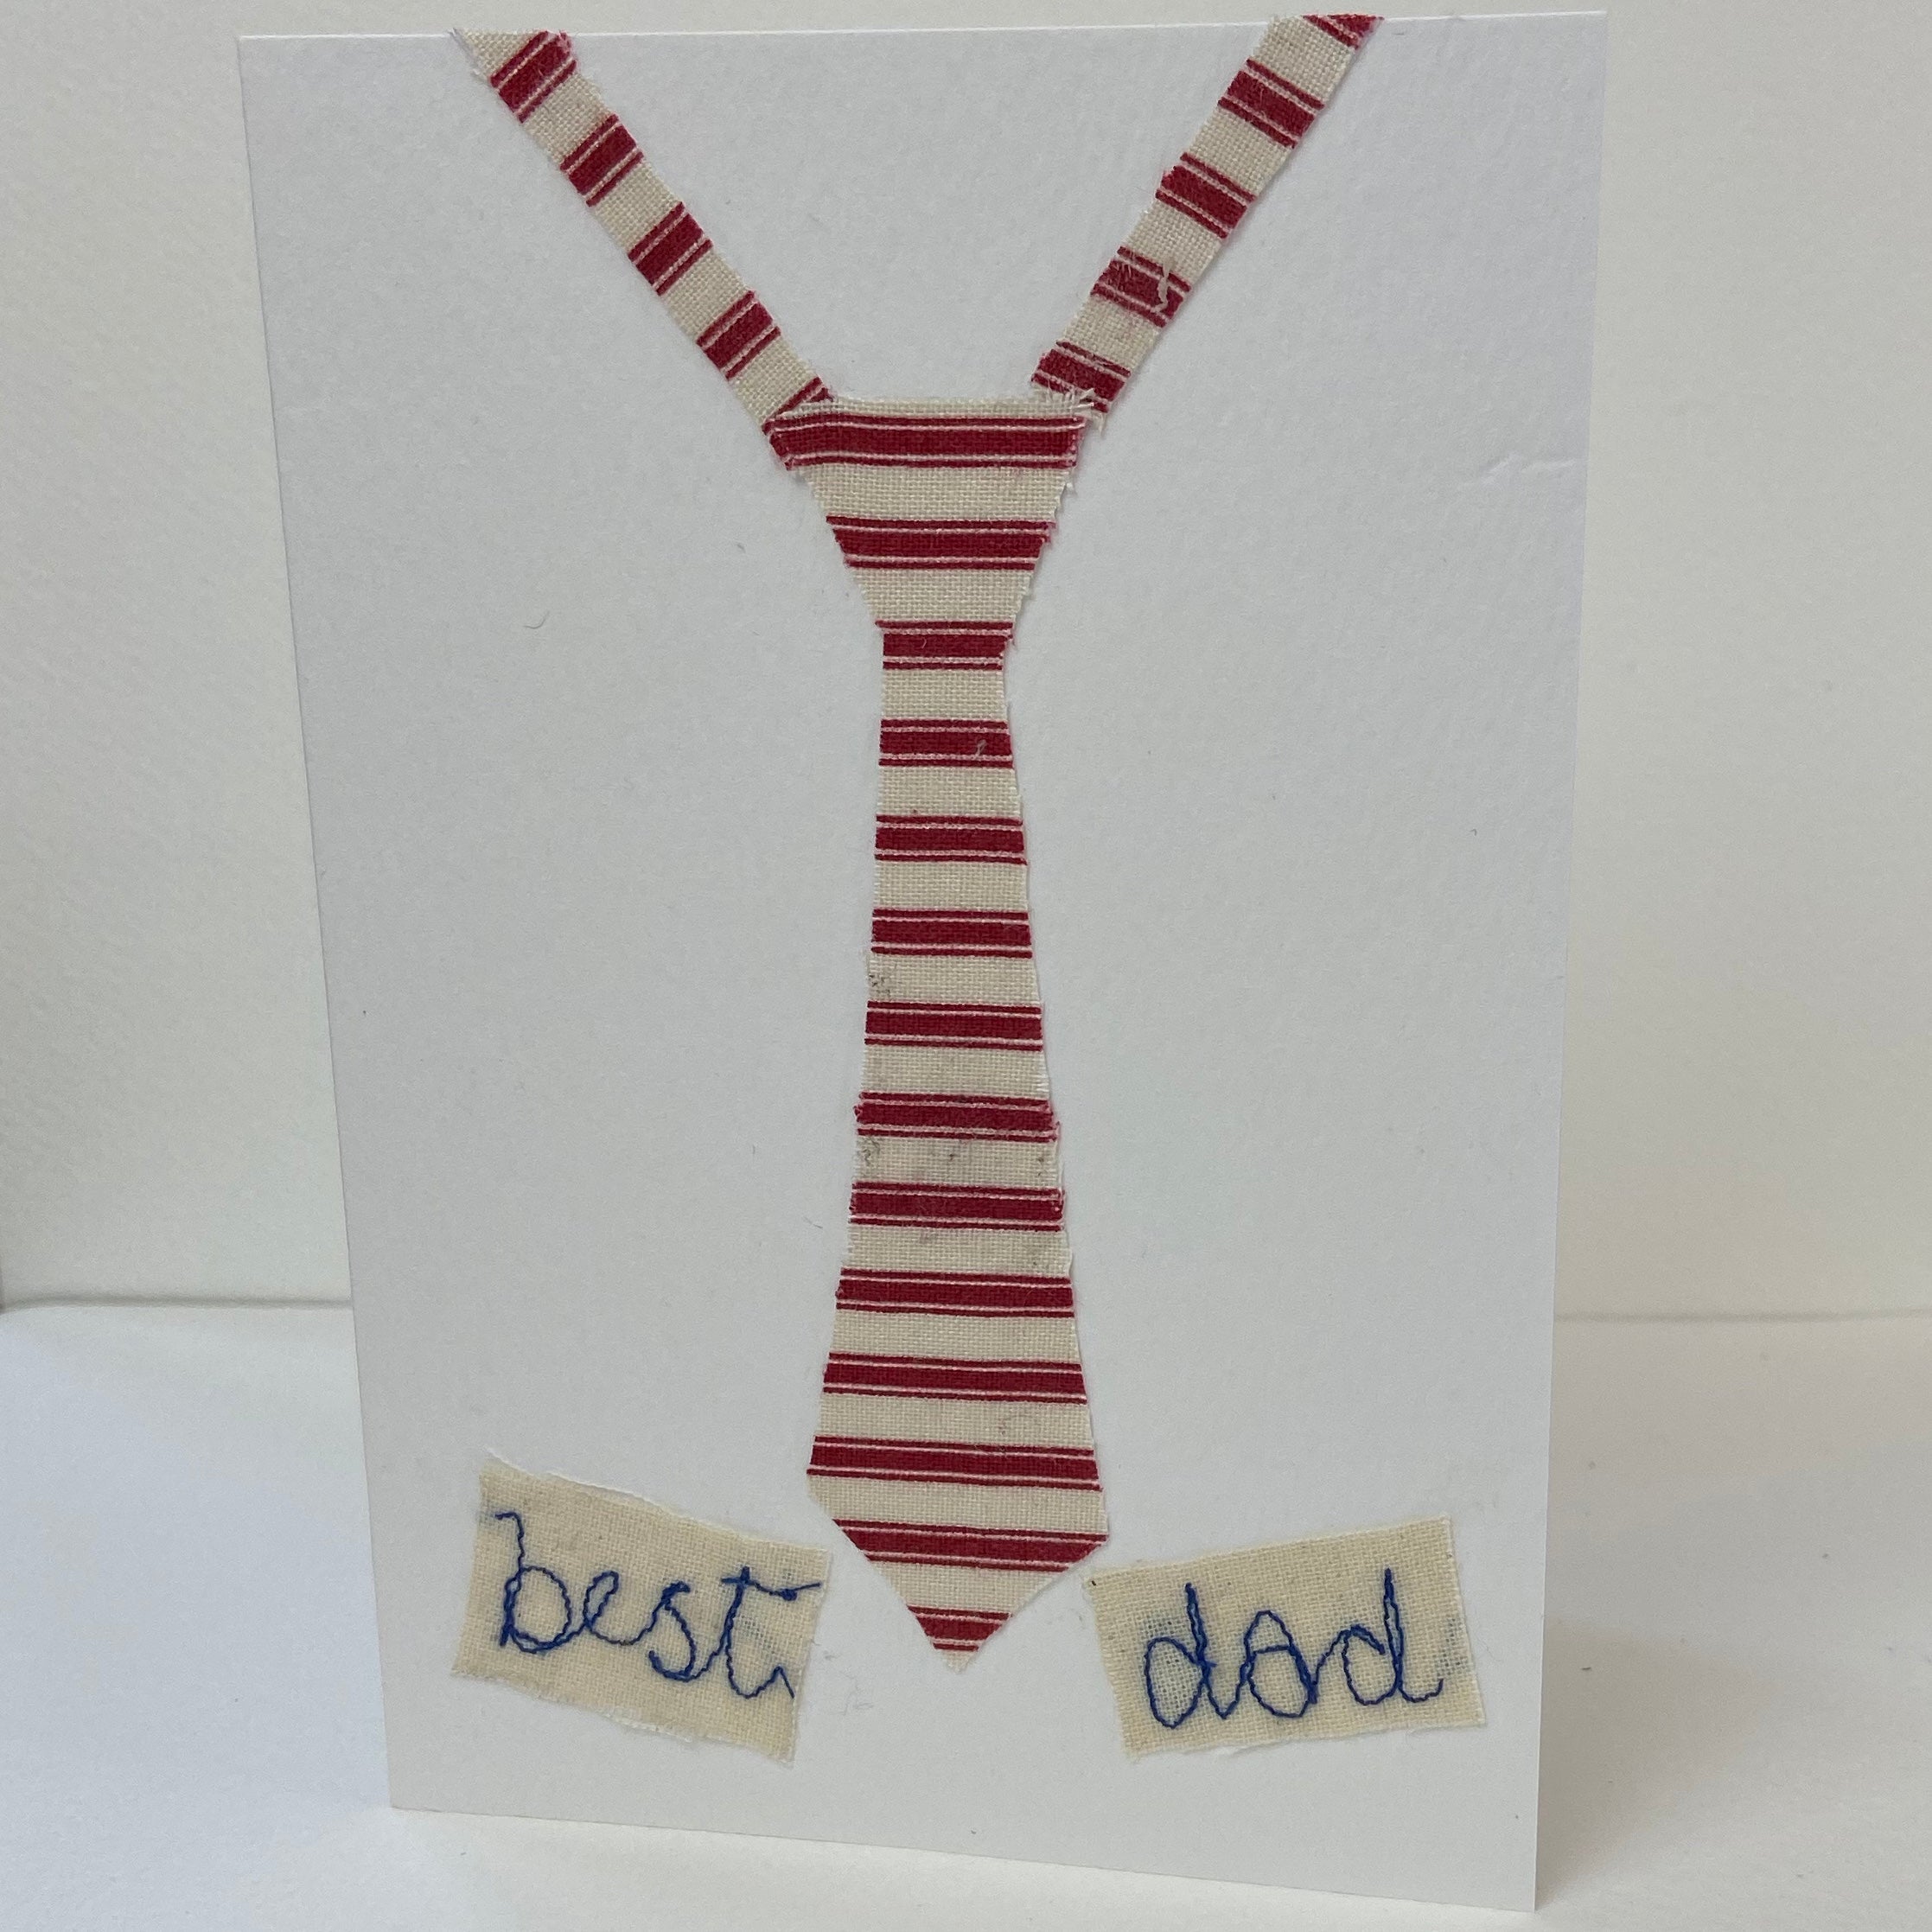 Dad Tie Card - The Nancy Smillie Shop - Art, Jewellery & Designer Gifts Glasgow